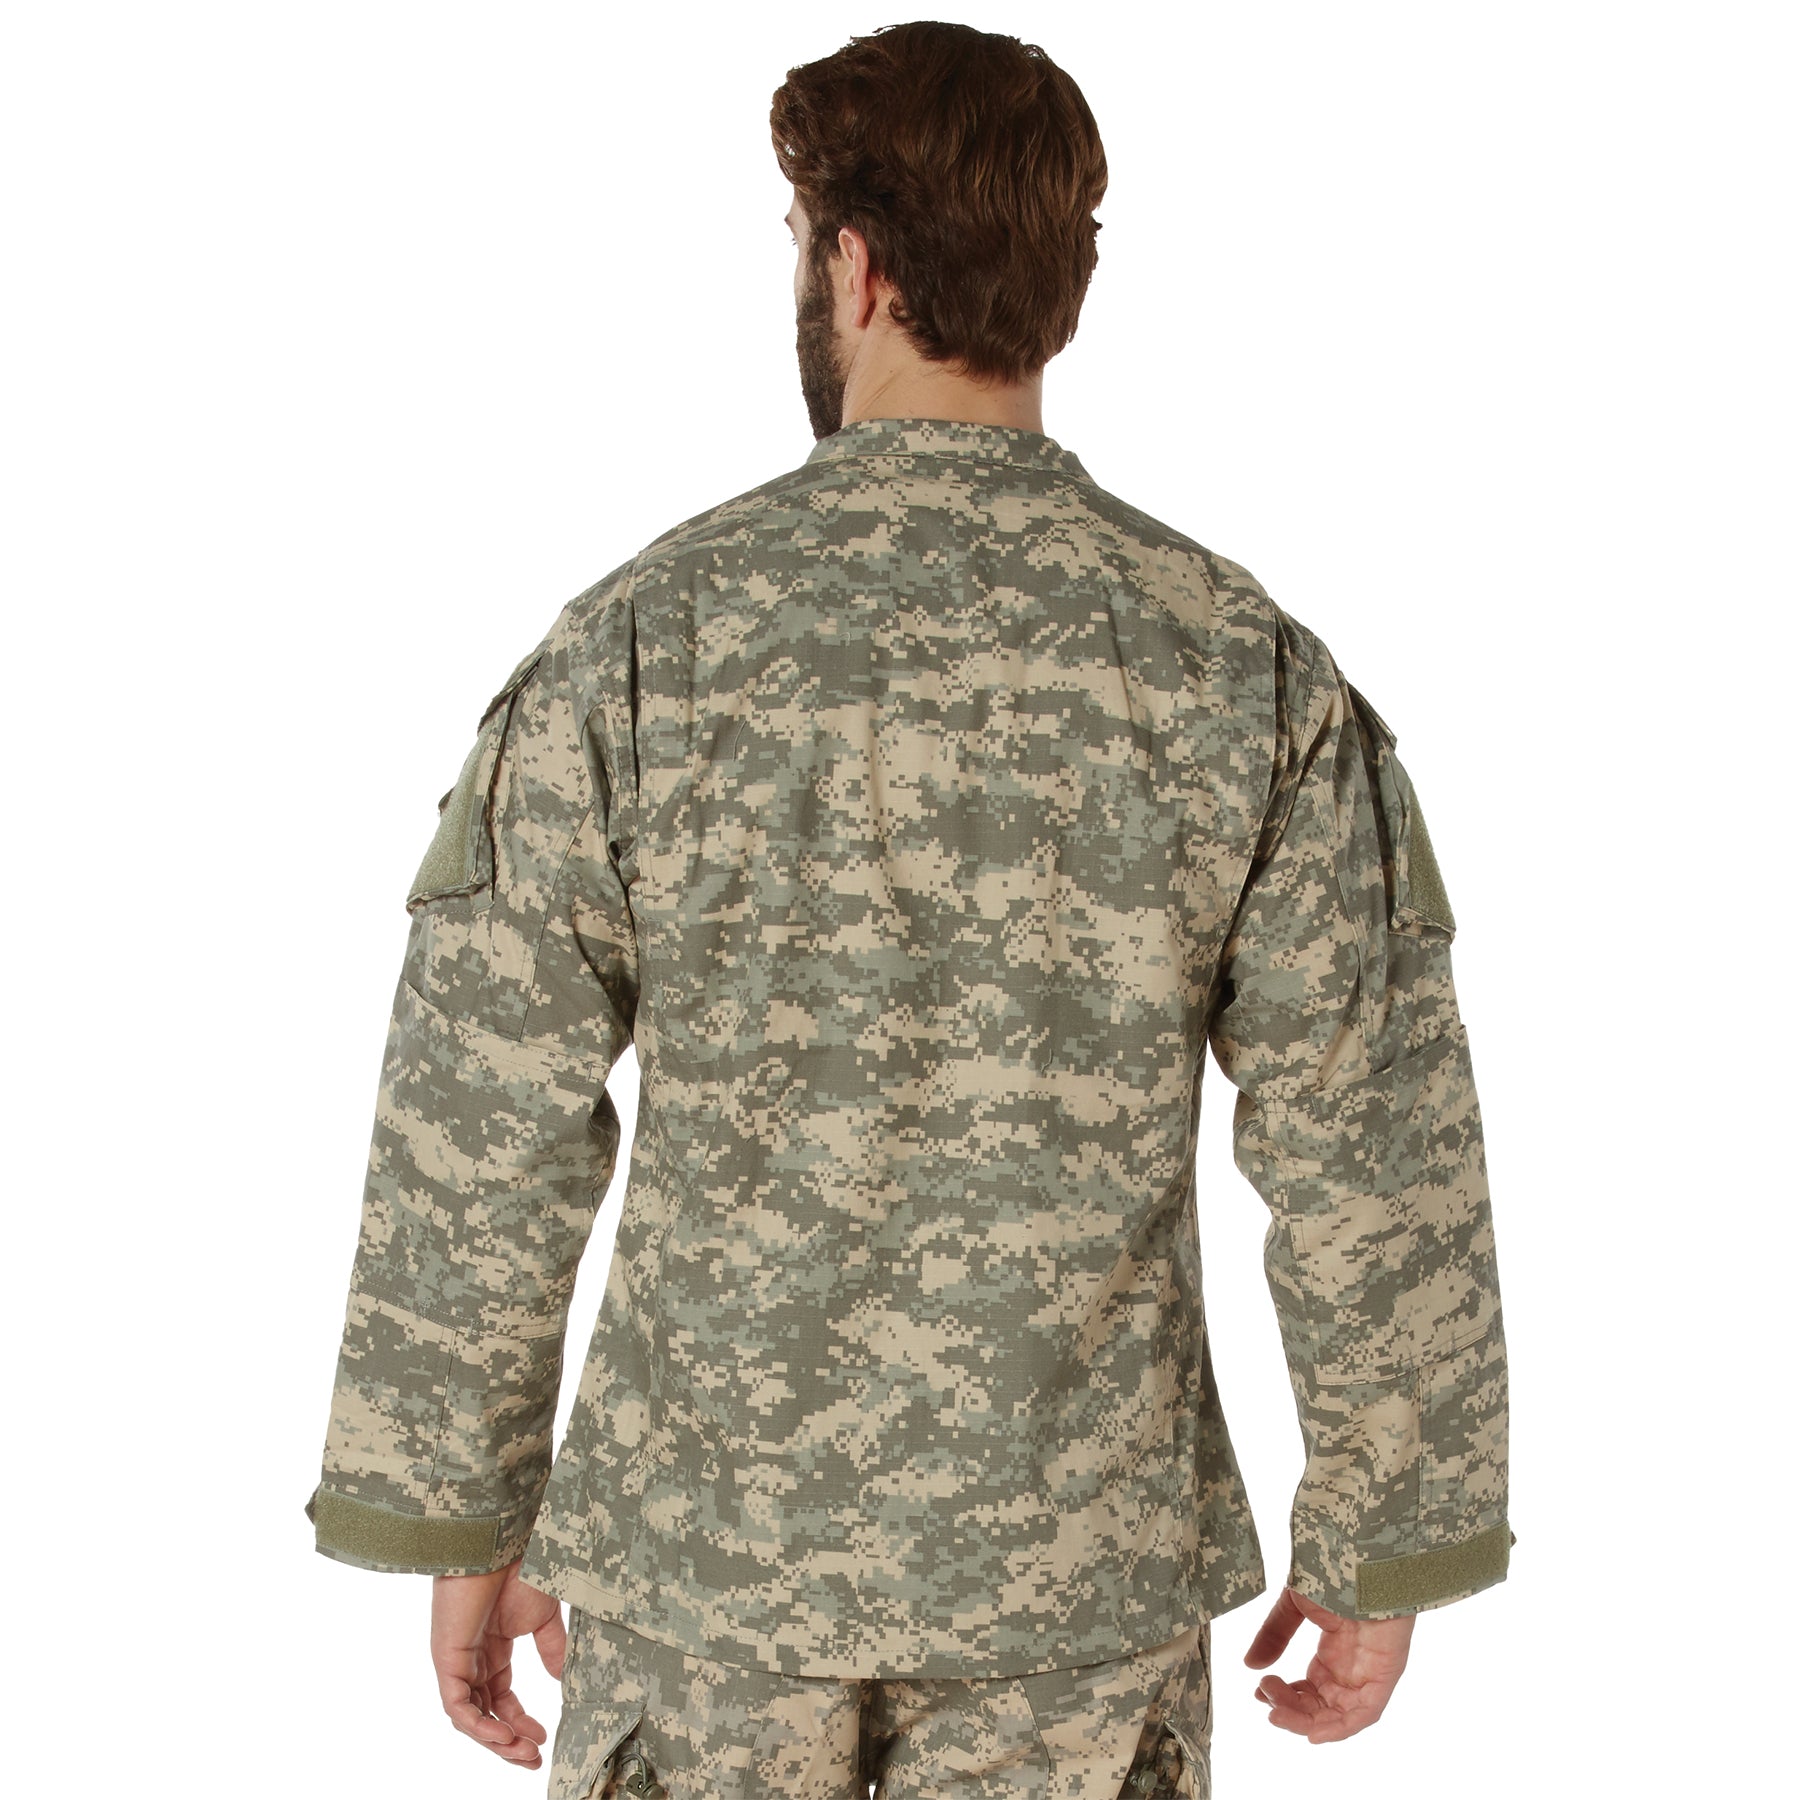 [Military] Digital Camo Poly/Cotton Rip-Stop Combat Uniform Shirts